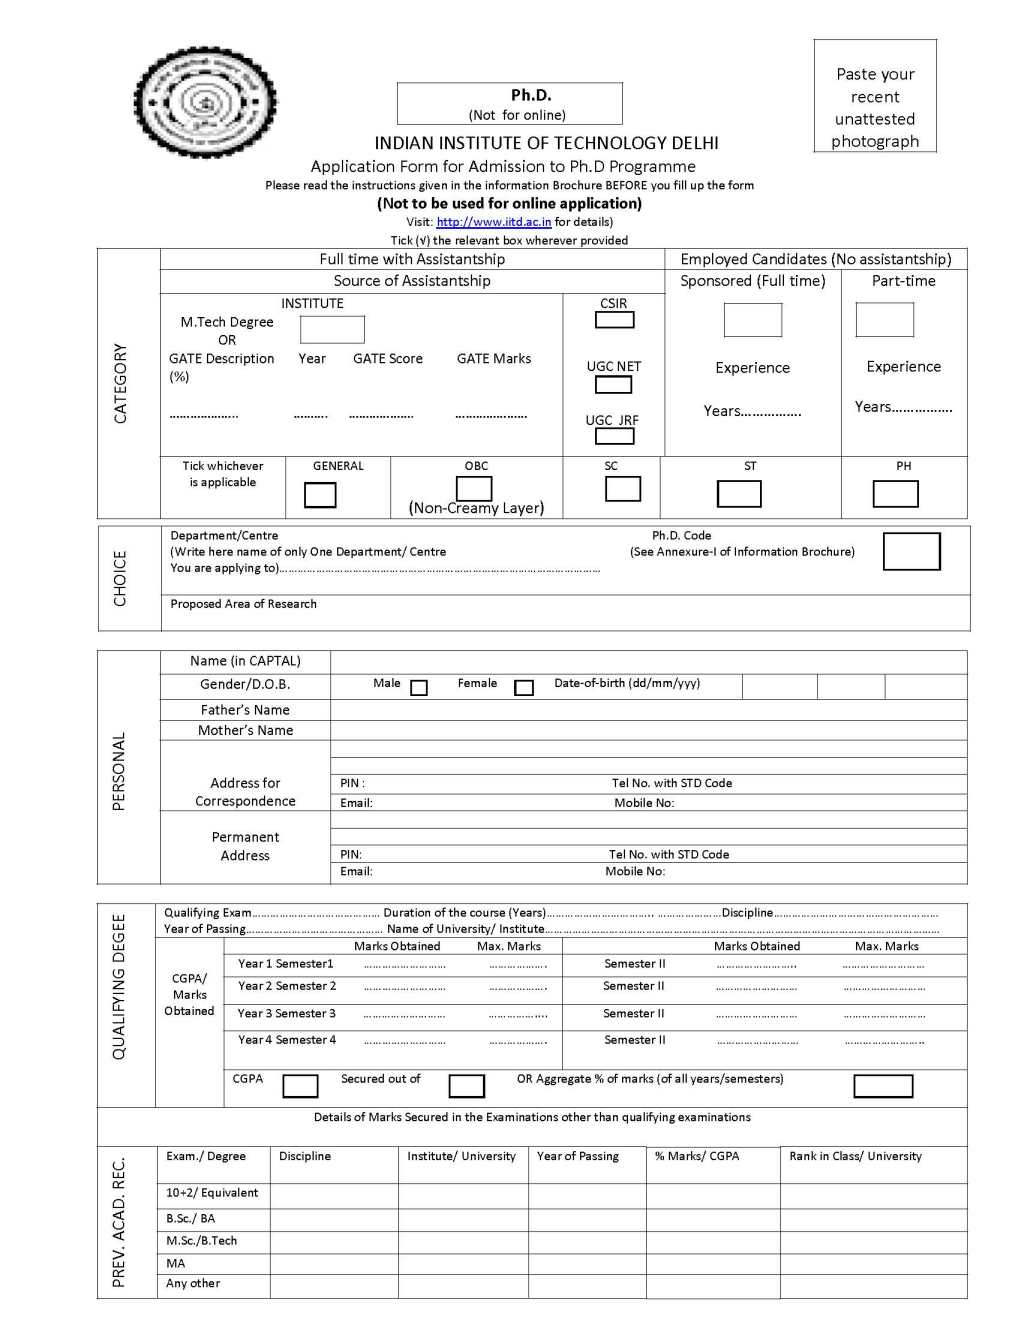 iit delhi phd application form 2022